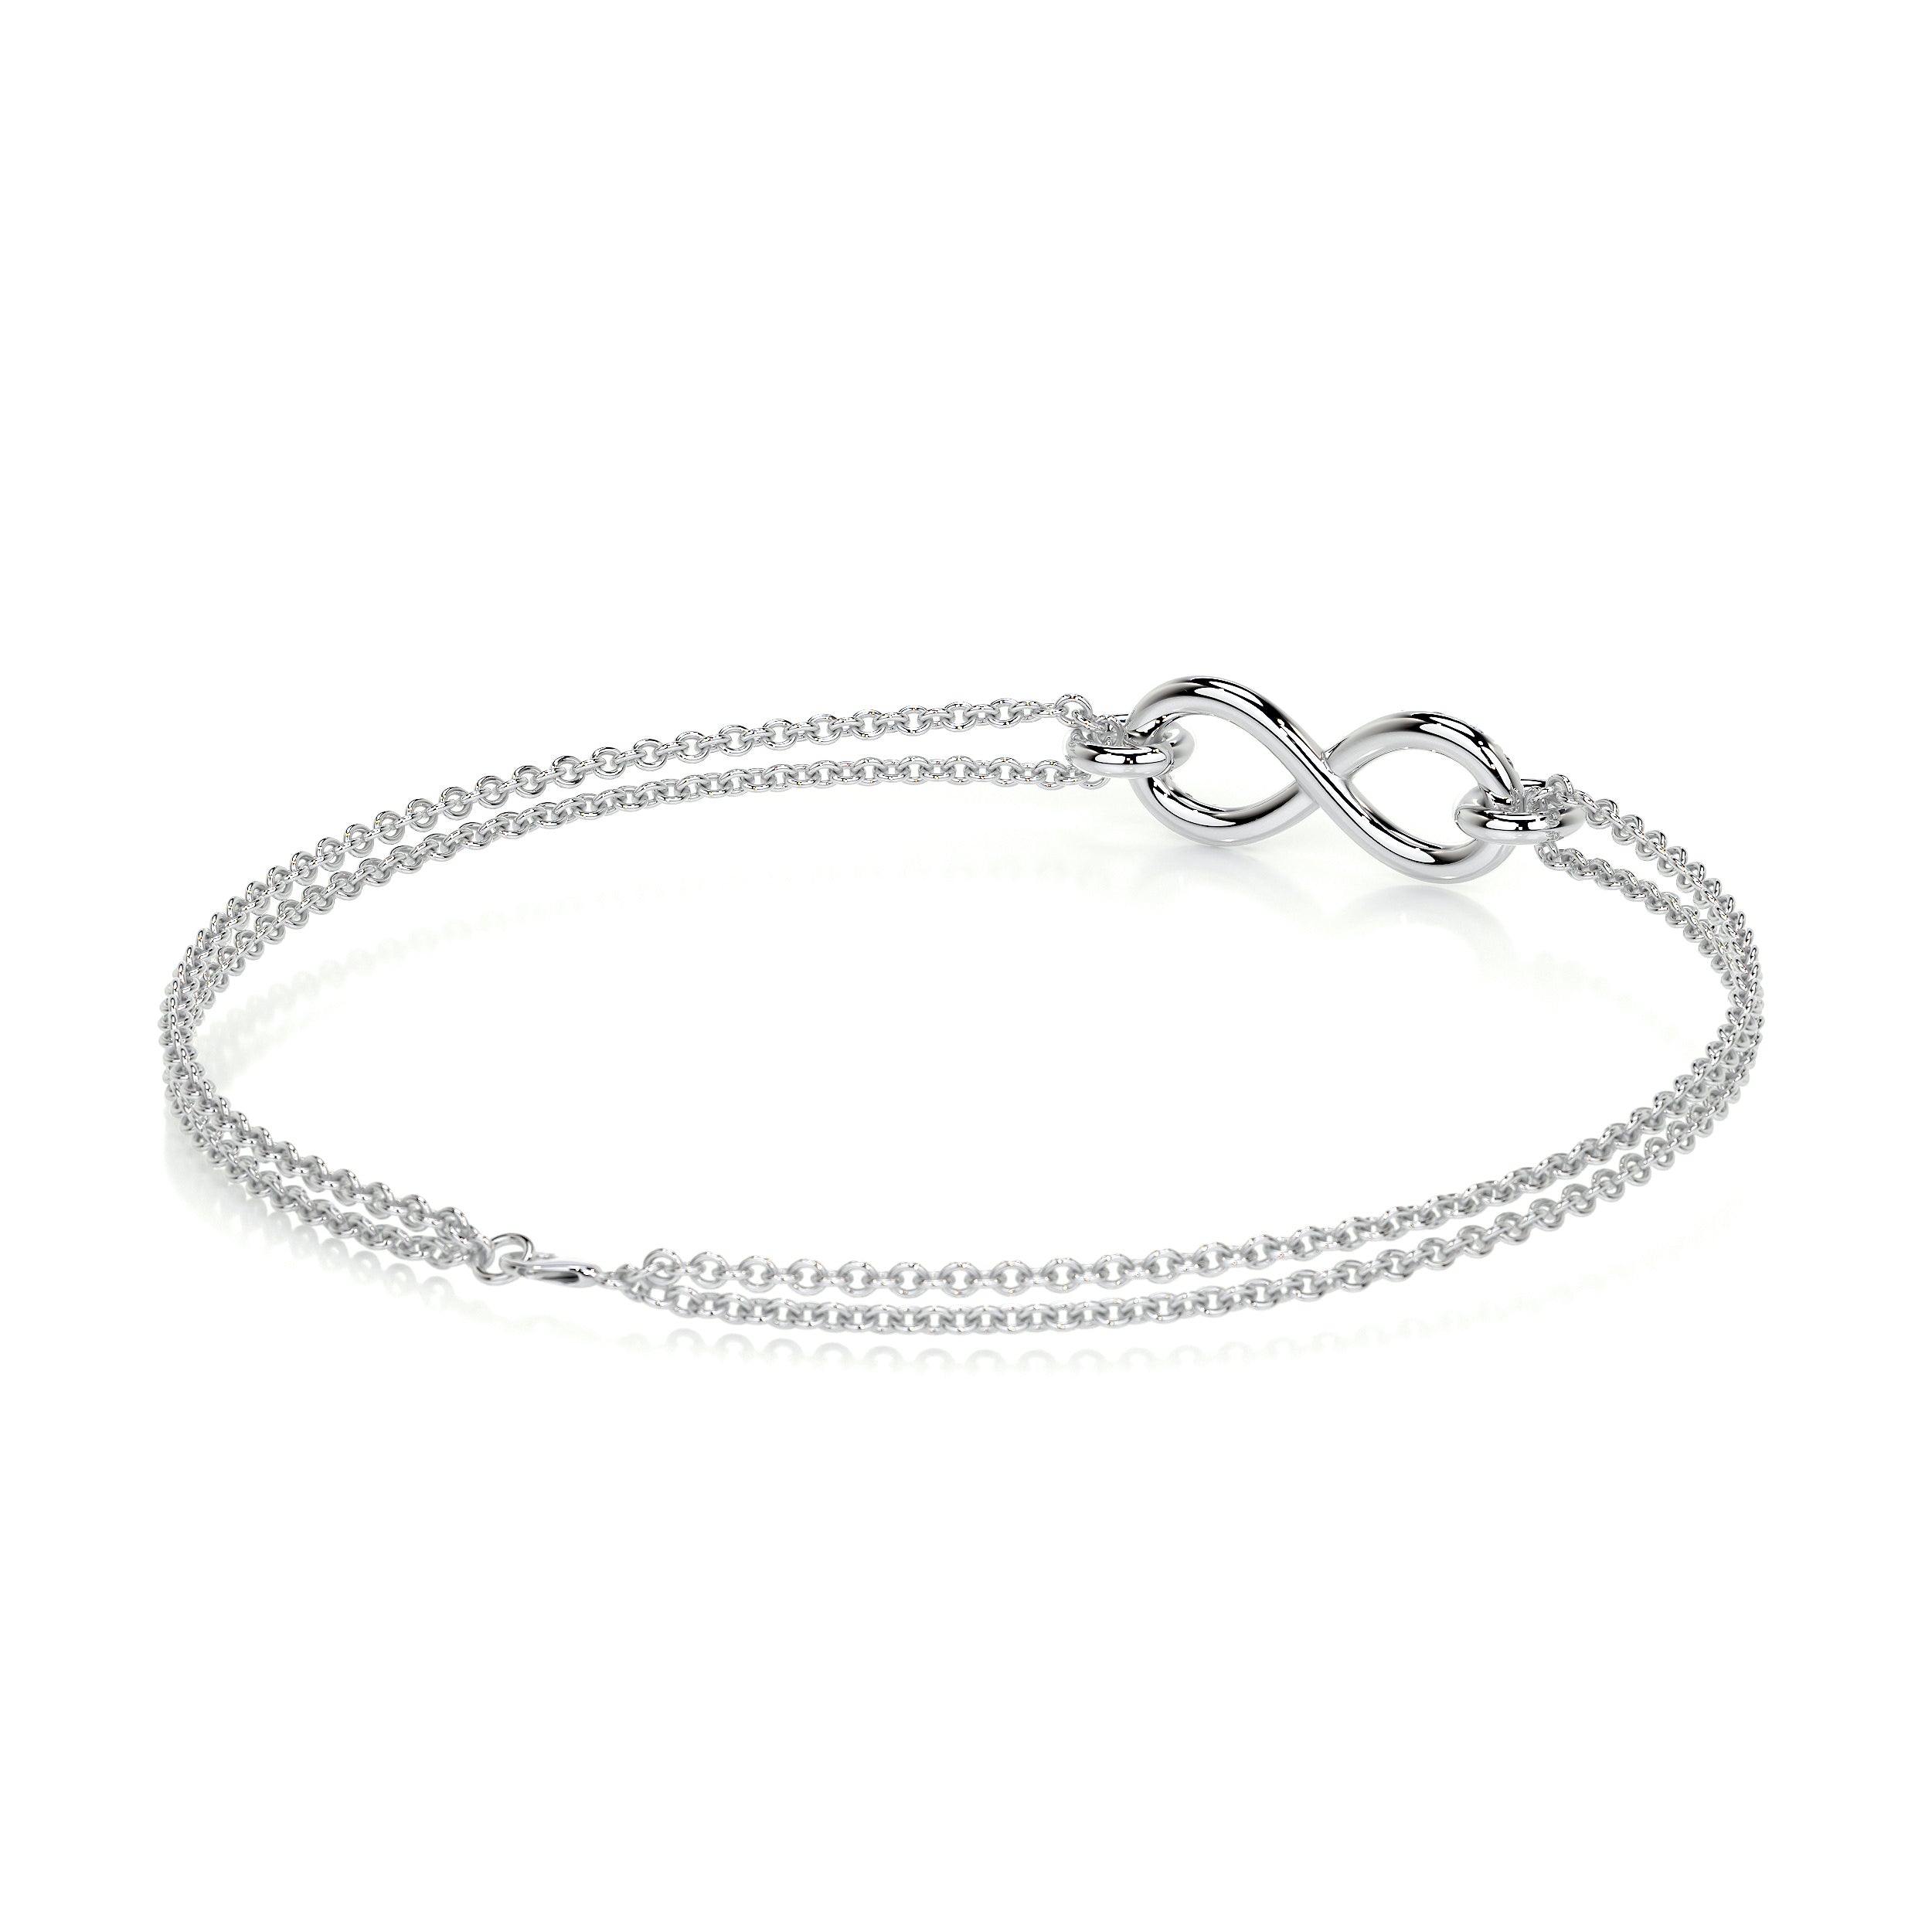 Candice Diamonds Bracelet   (0.07 Carat) -14K White Gold